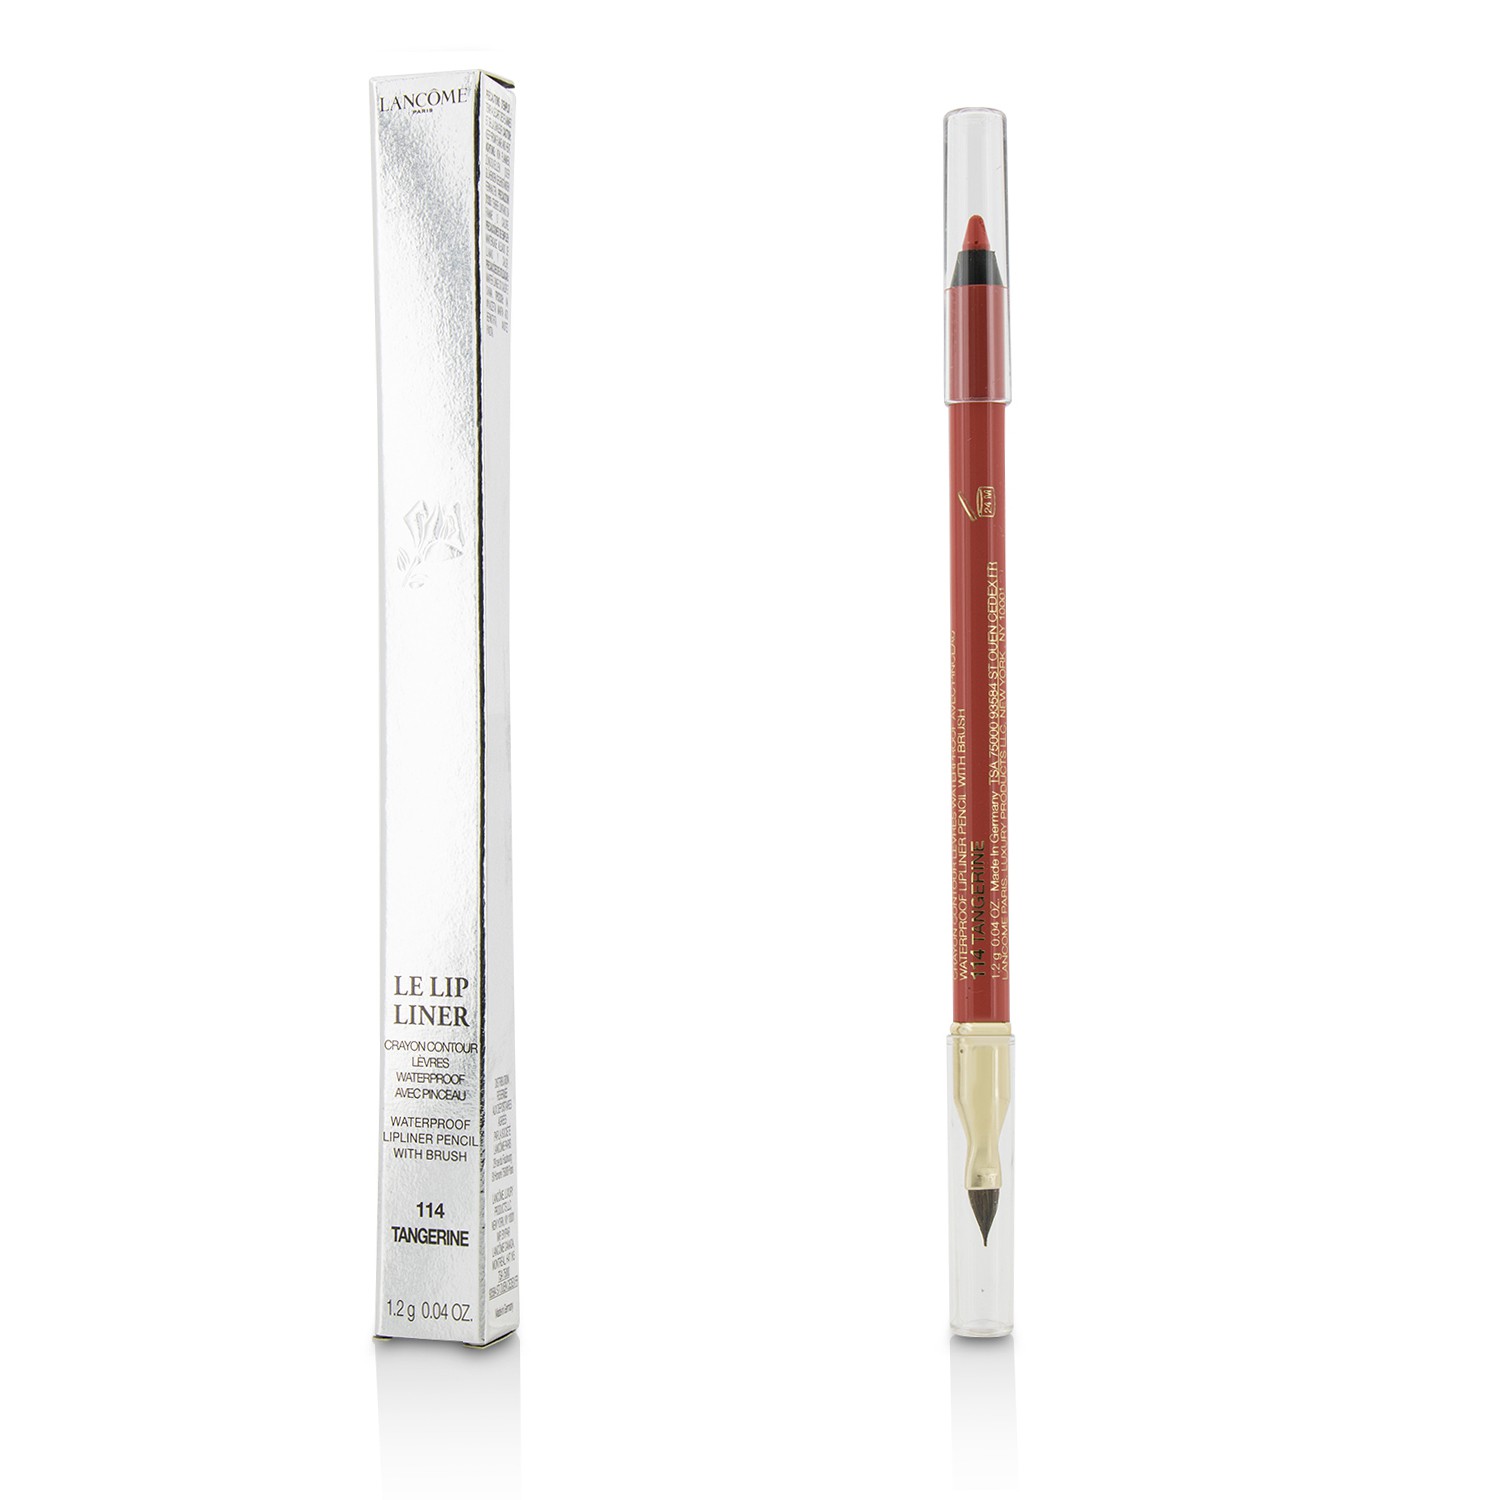 Le Lip Liner Waterproof Lip Pencil With Brush - #114 Tangerine Lancome Image